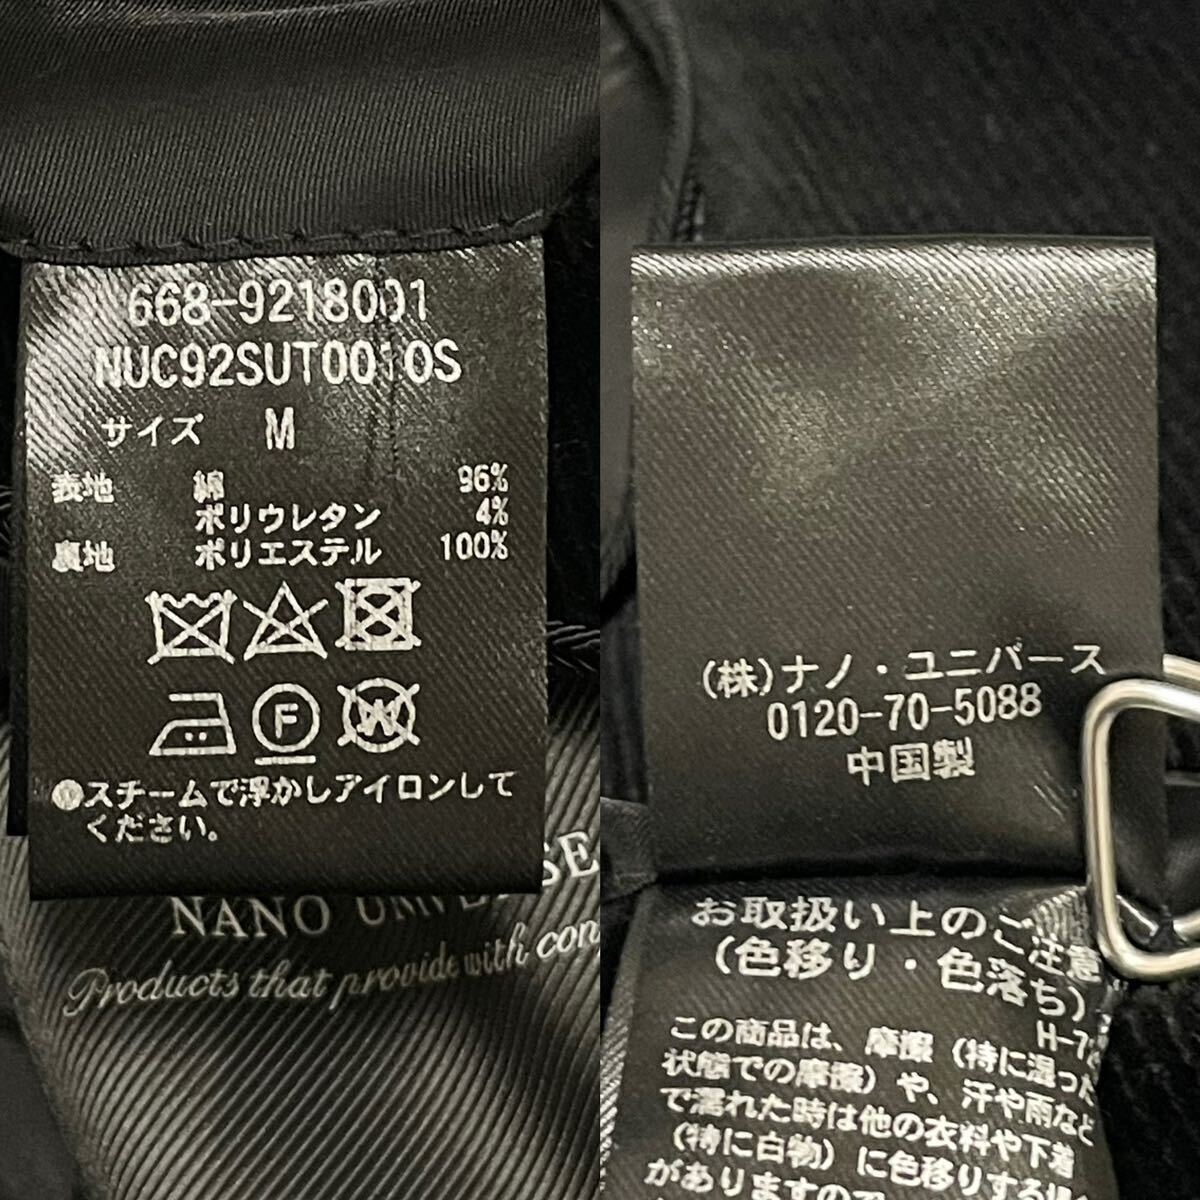  Nano Universe [ adult goods .]NANO UNIVERSE setup suit jacket corduroy black black stretch cotton M 3799